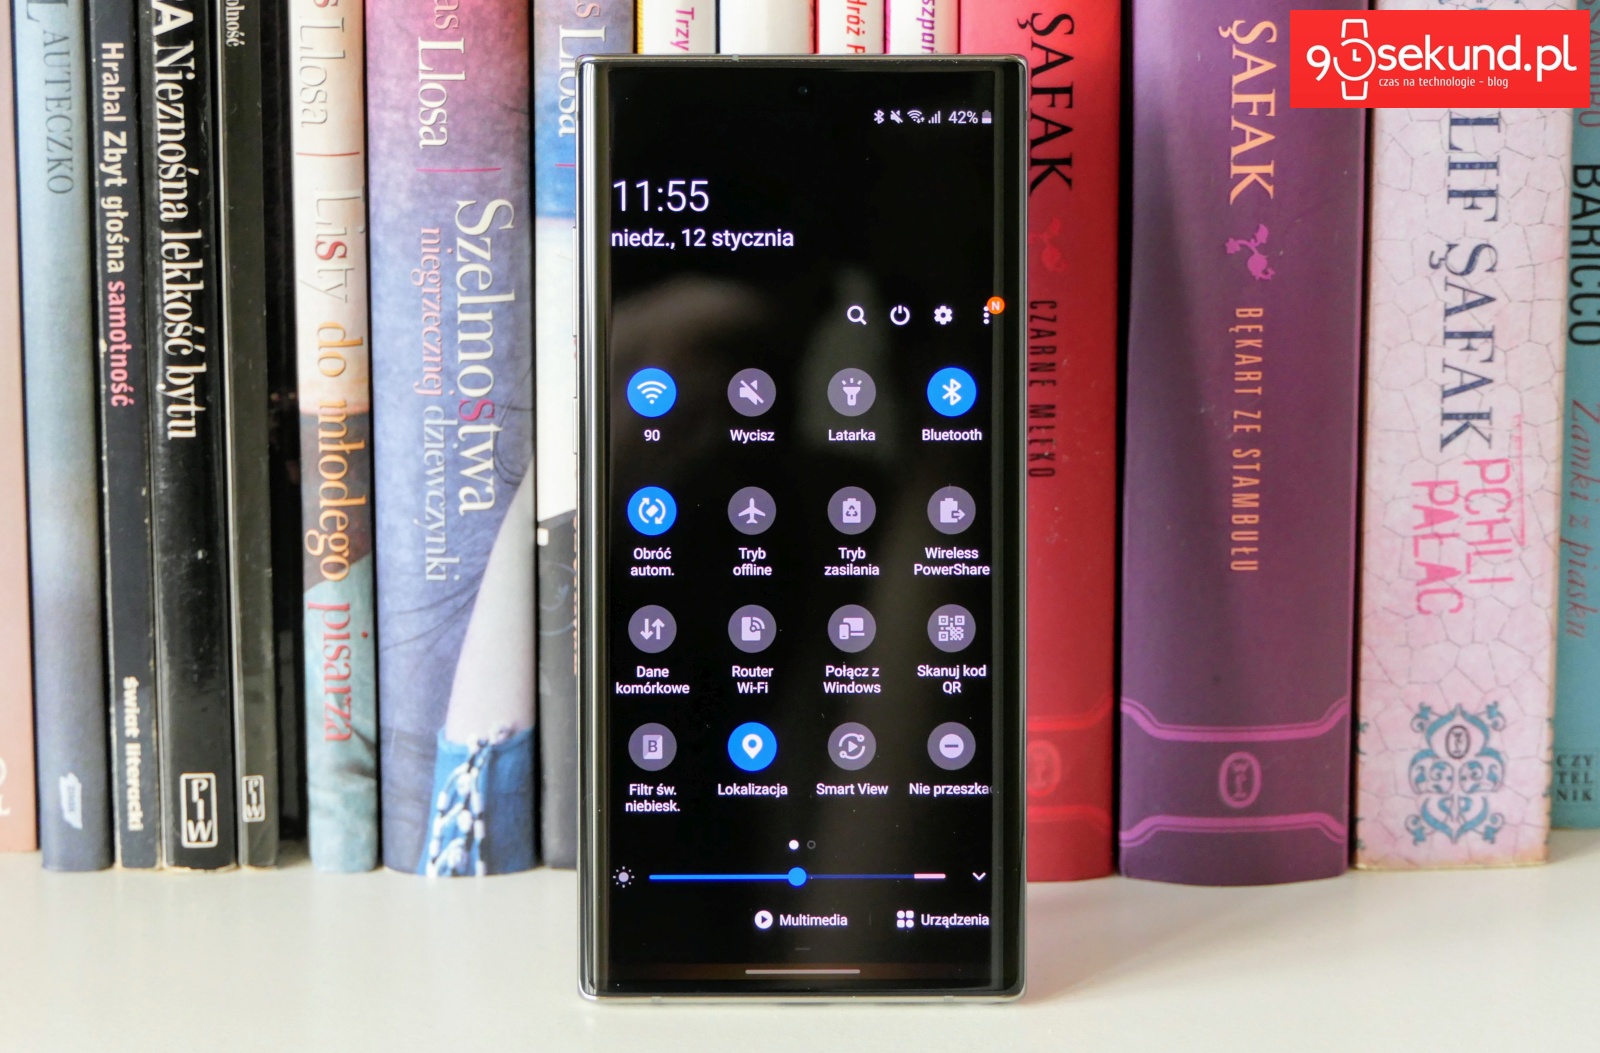 Samsung Galaxy Note 10+ - Michał Brożyński - 90sekund.pl